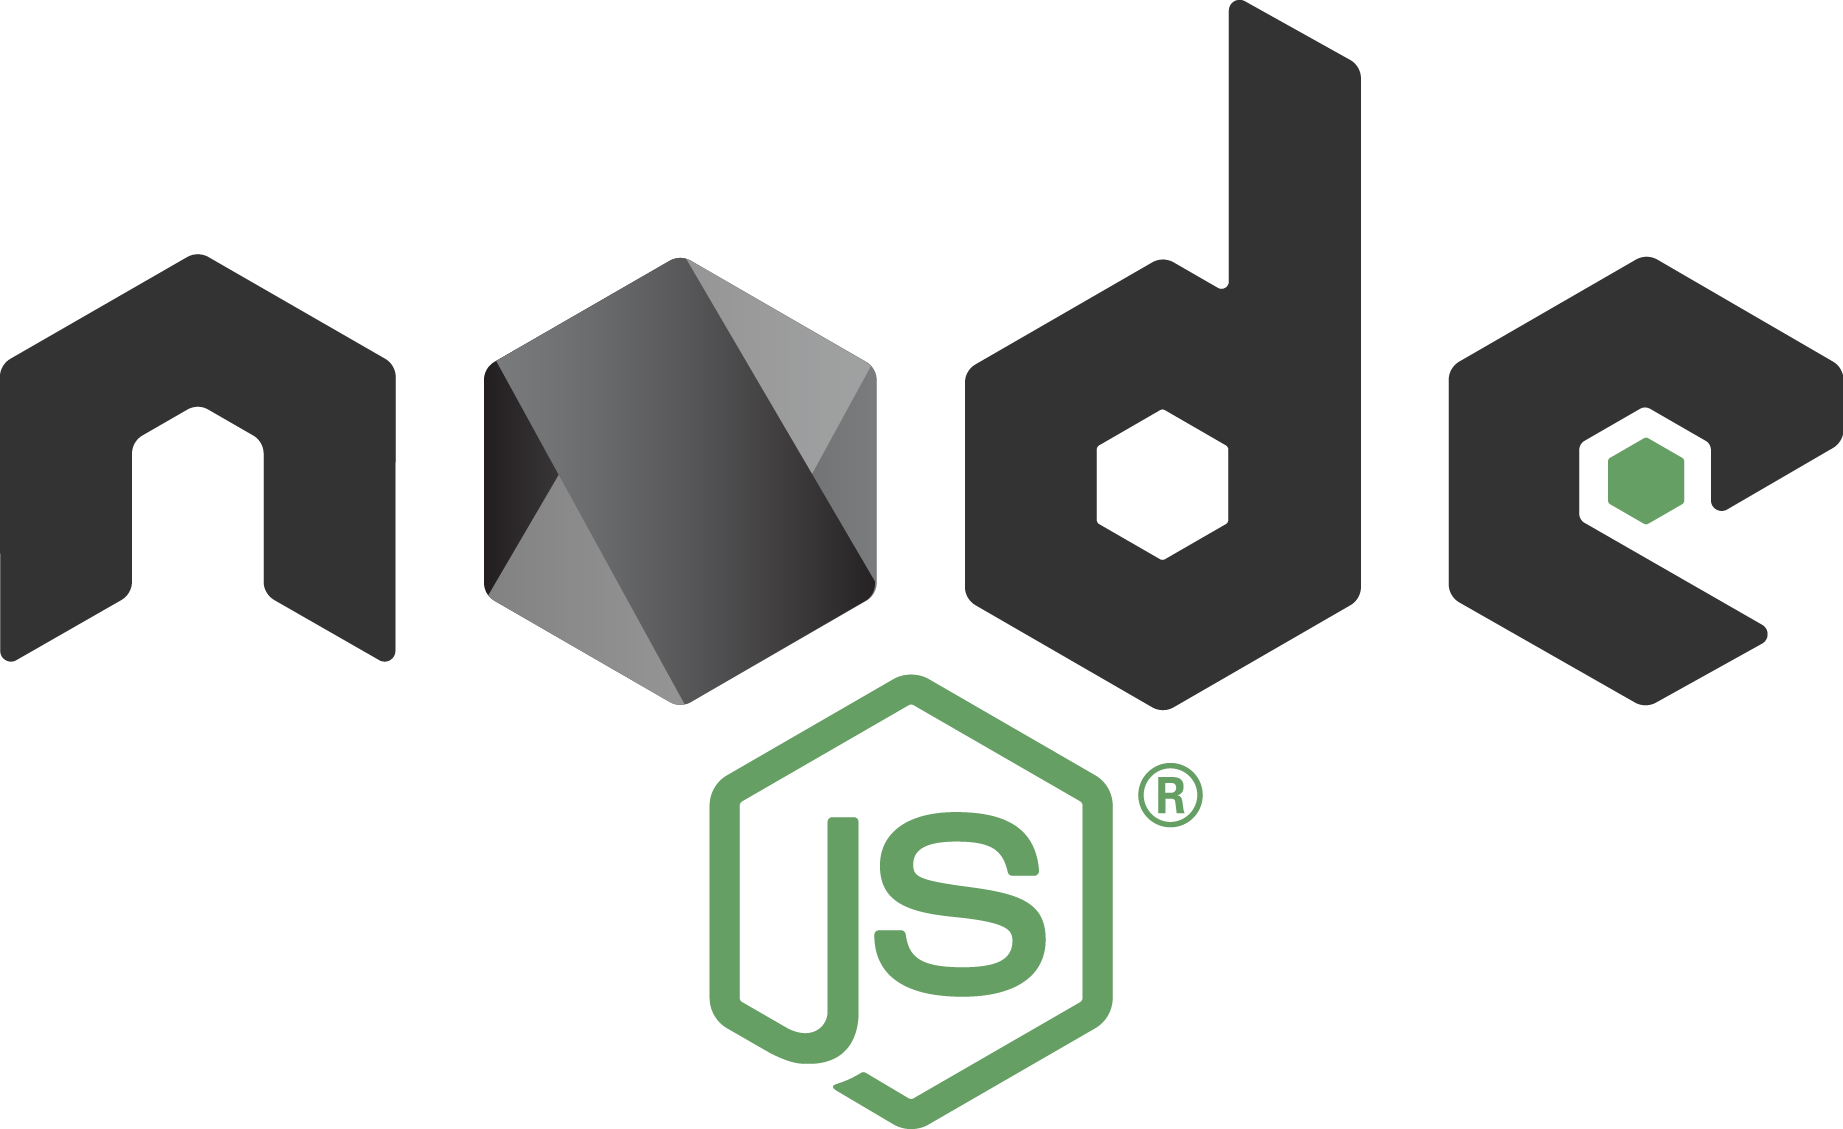 Node.js on light background